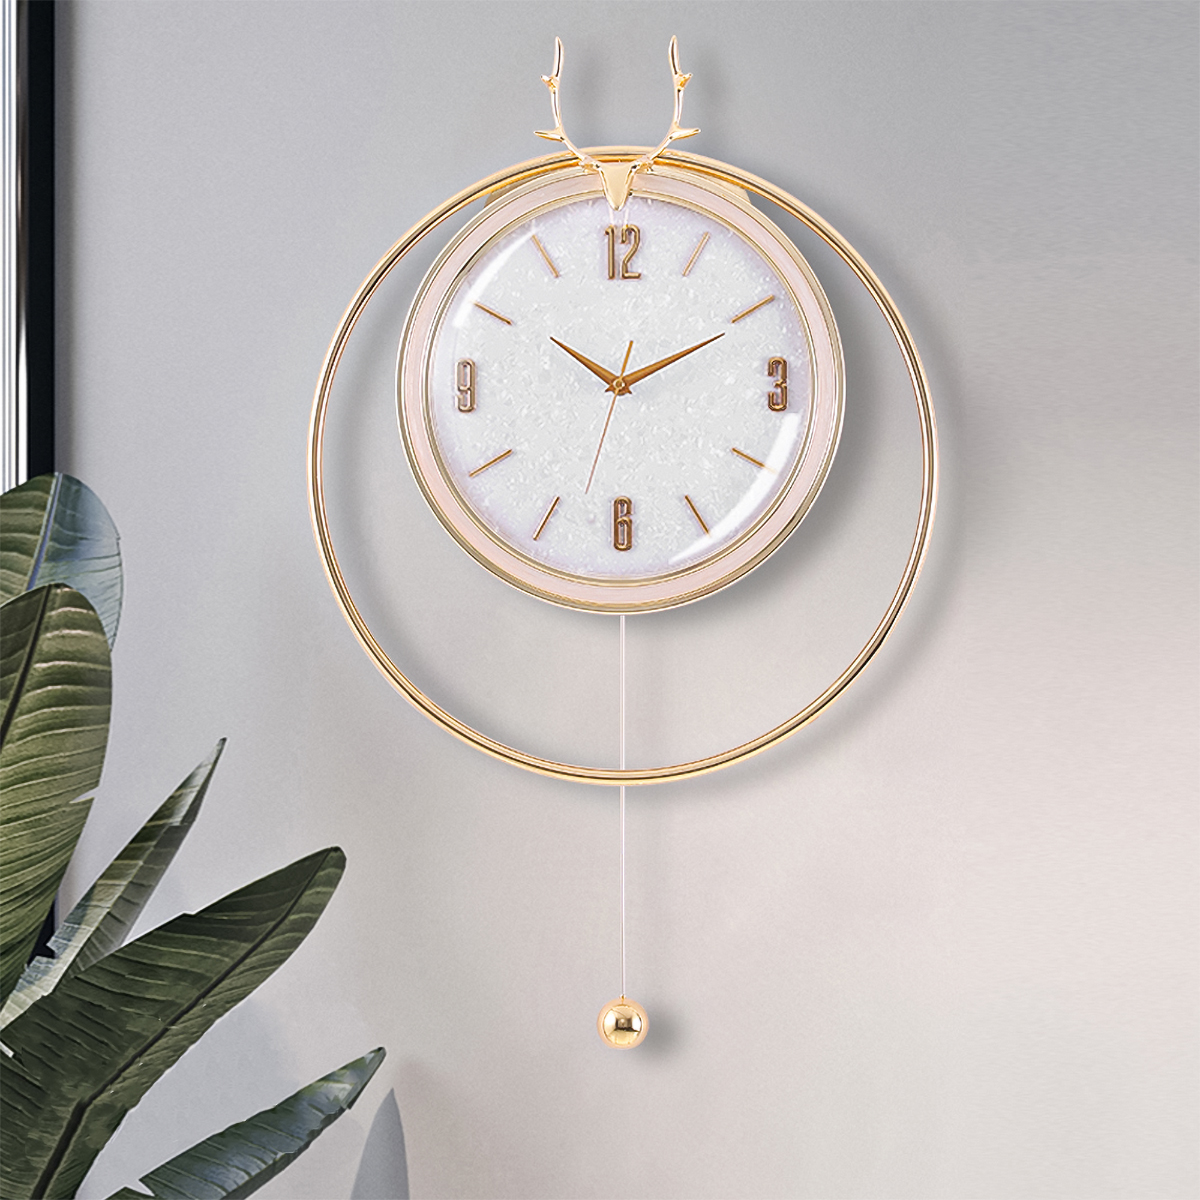 Ceas de perete cu pendul, stil elegant, Metal, mecanism Silentios, D4205, 45*70 cm, Auriu/Alb image